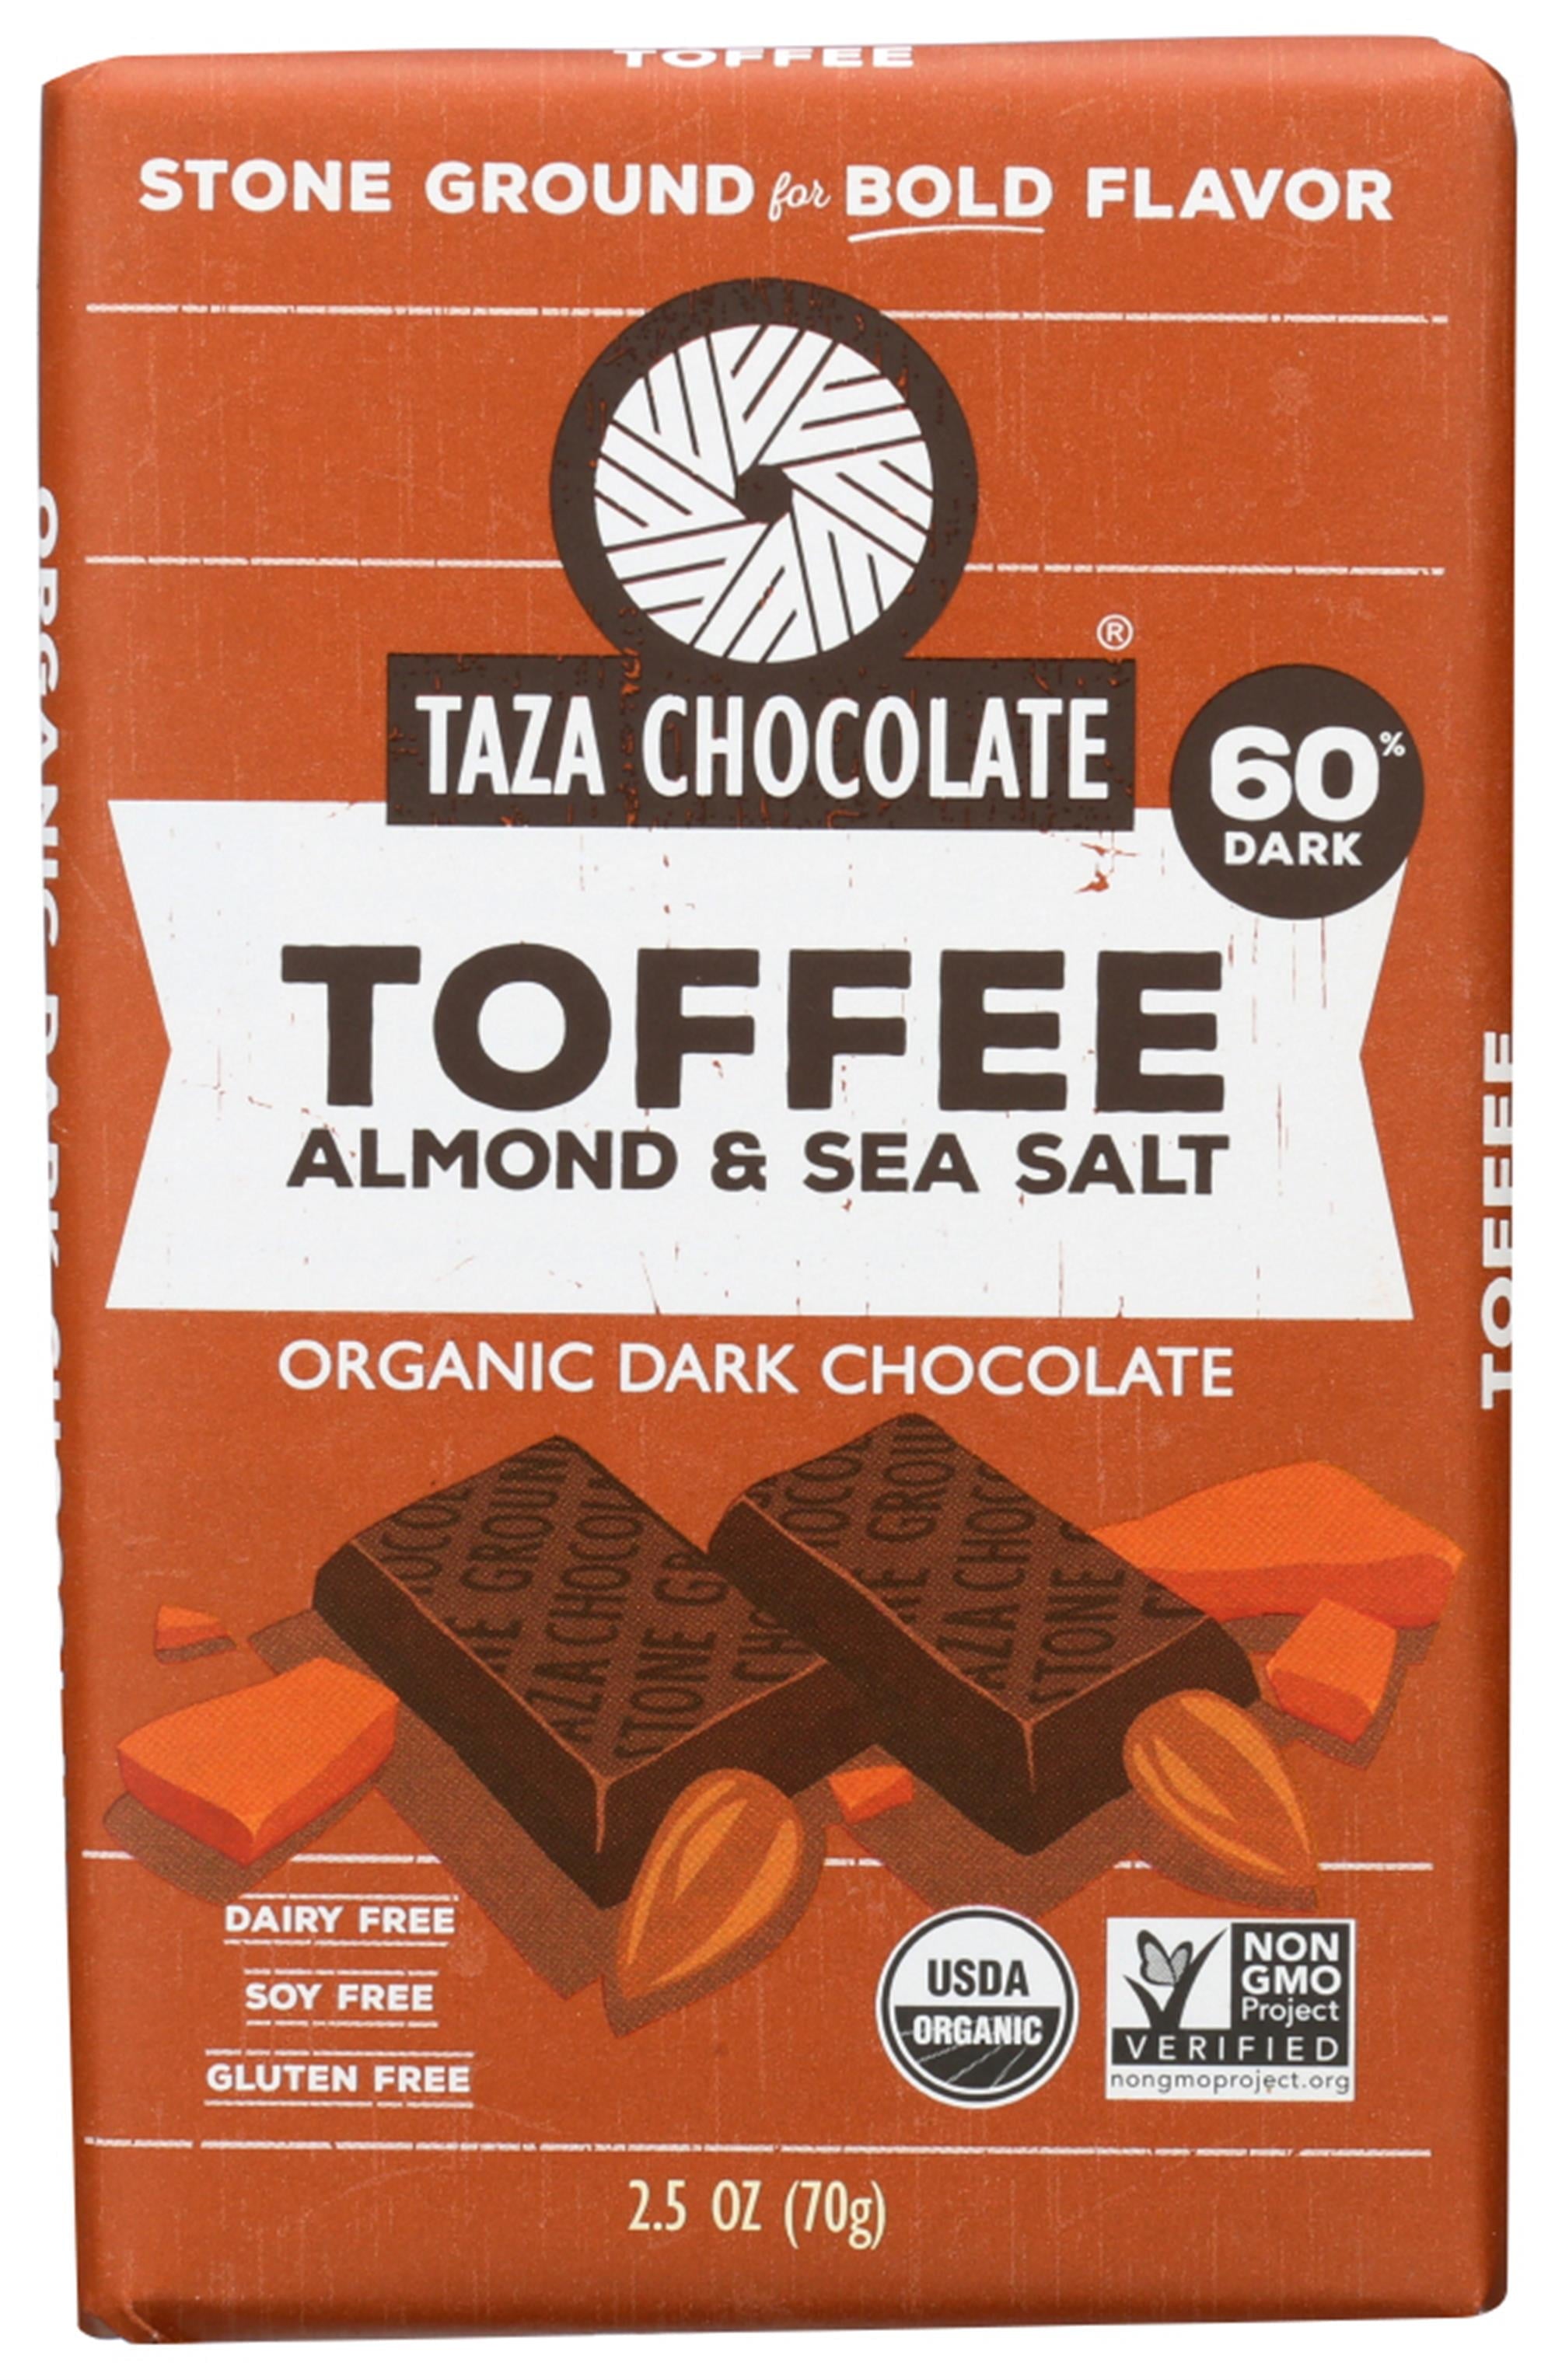 Taza Chocolate 60% Dark Toffee Almond & Sea Salt 2.5 Oz